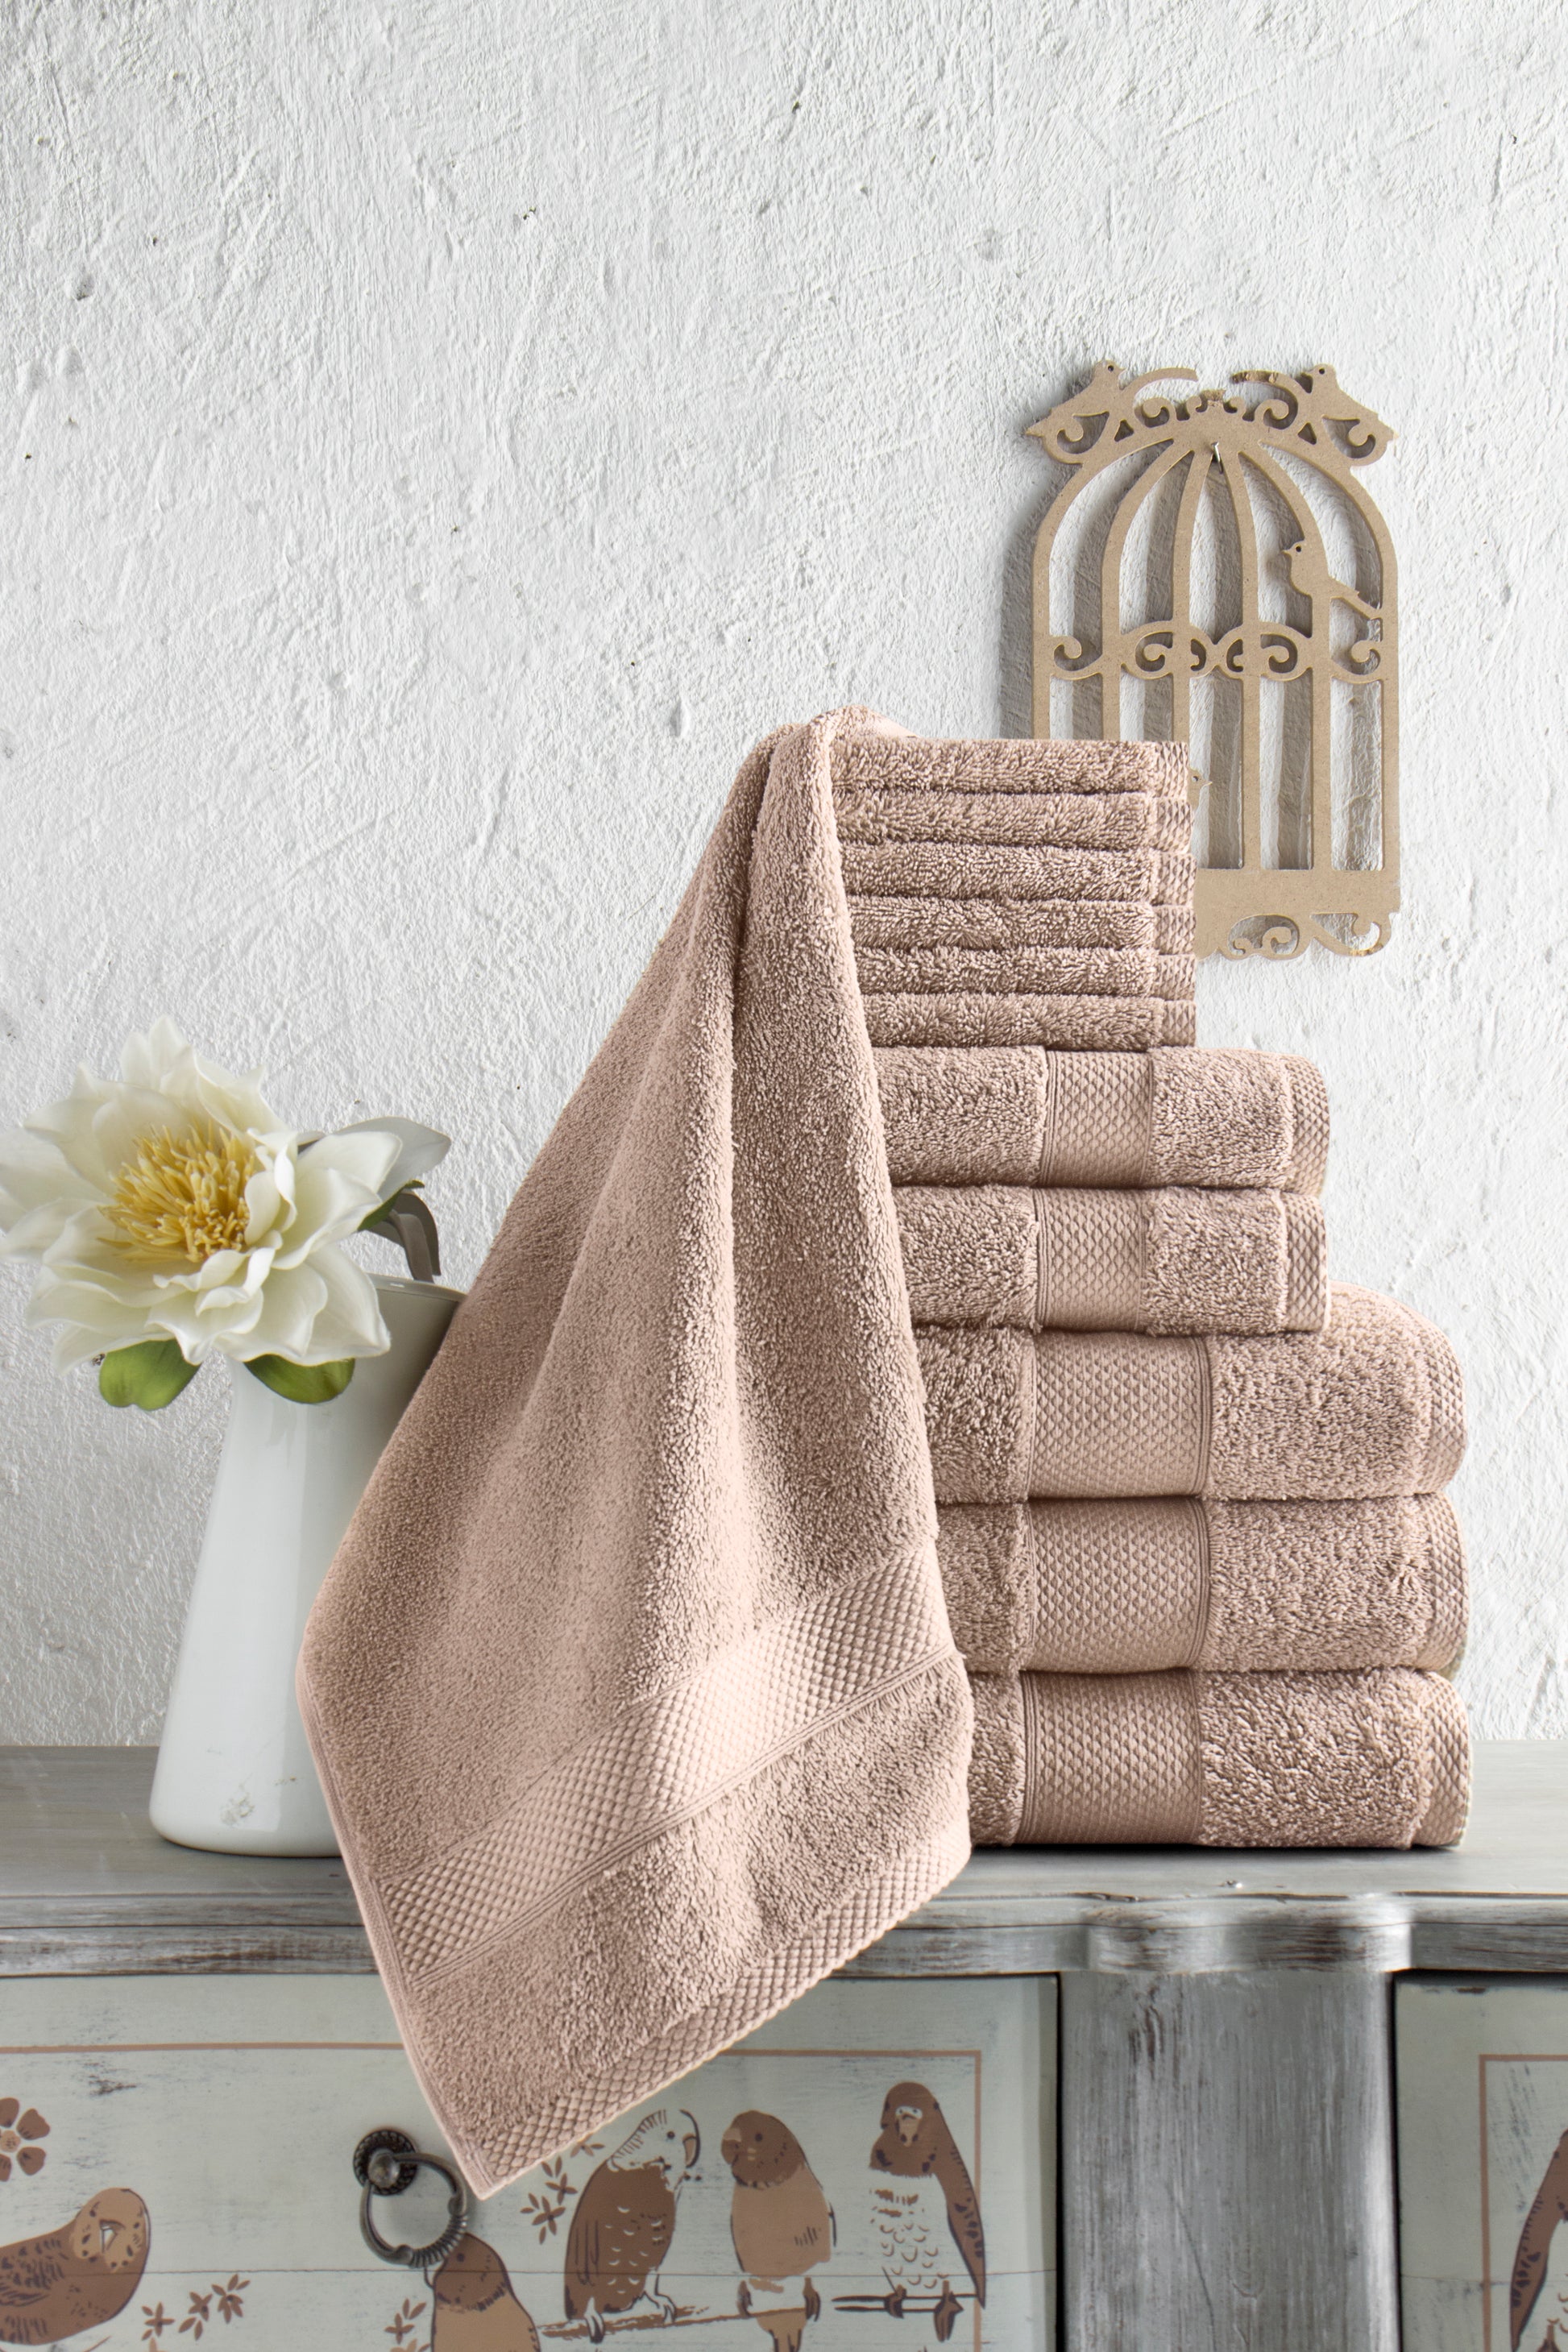 The Bath Towel for Sensitive Skin